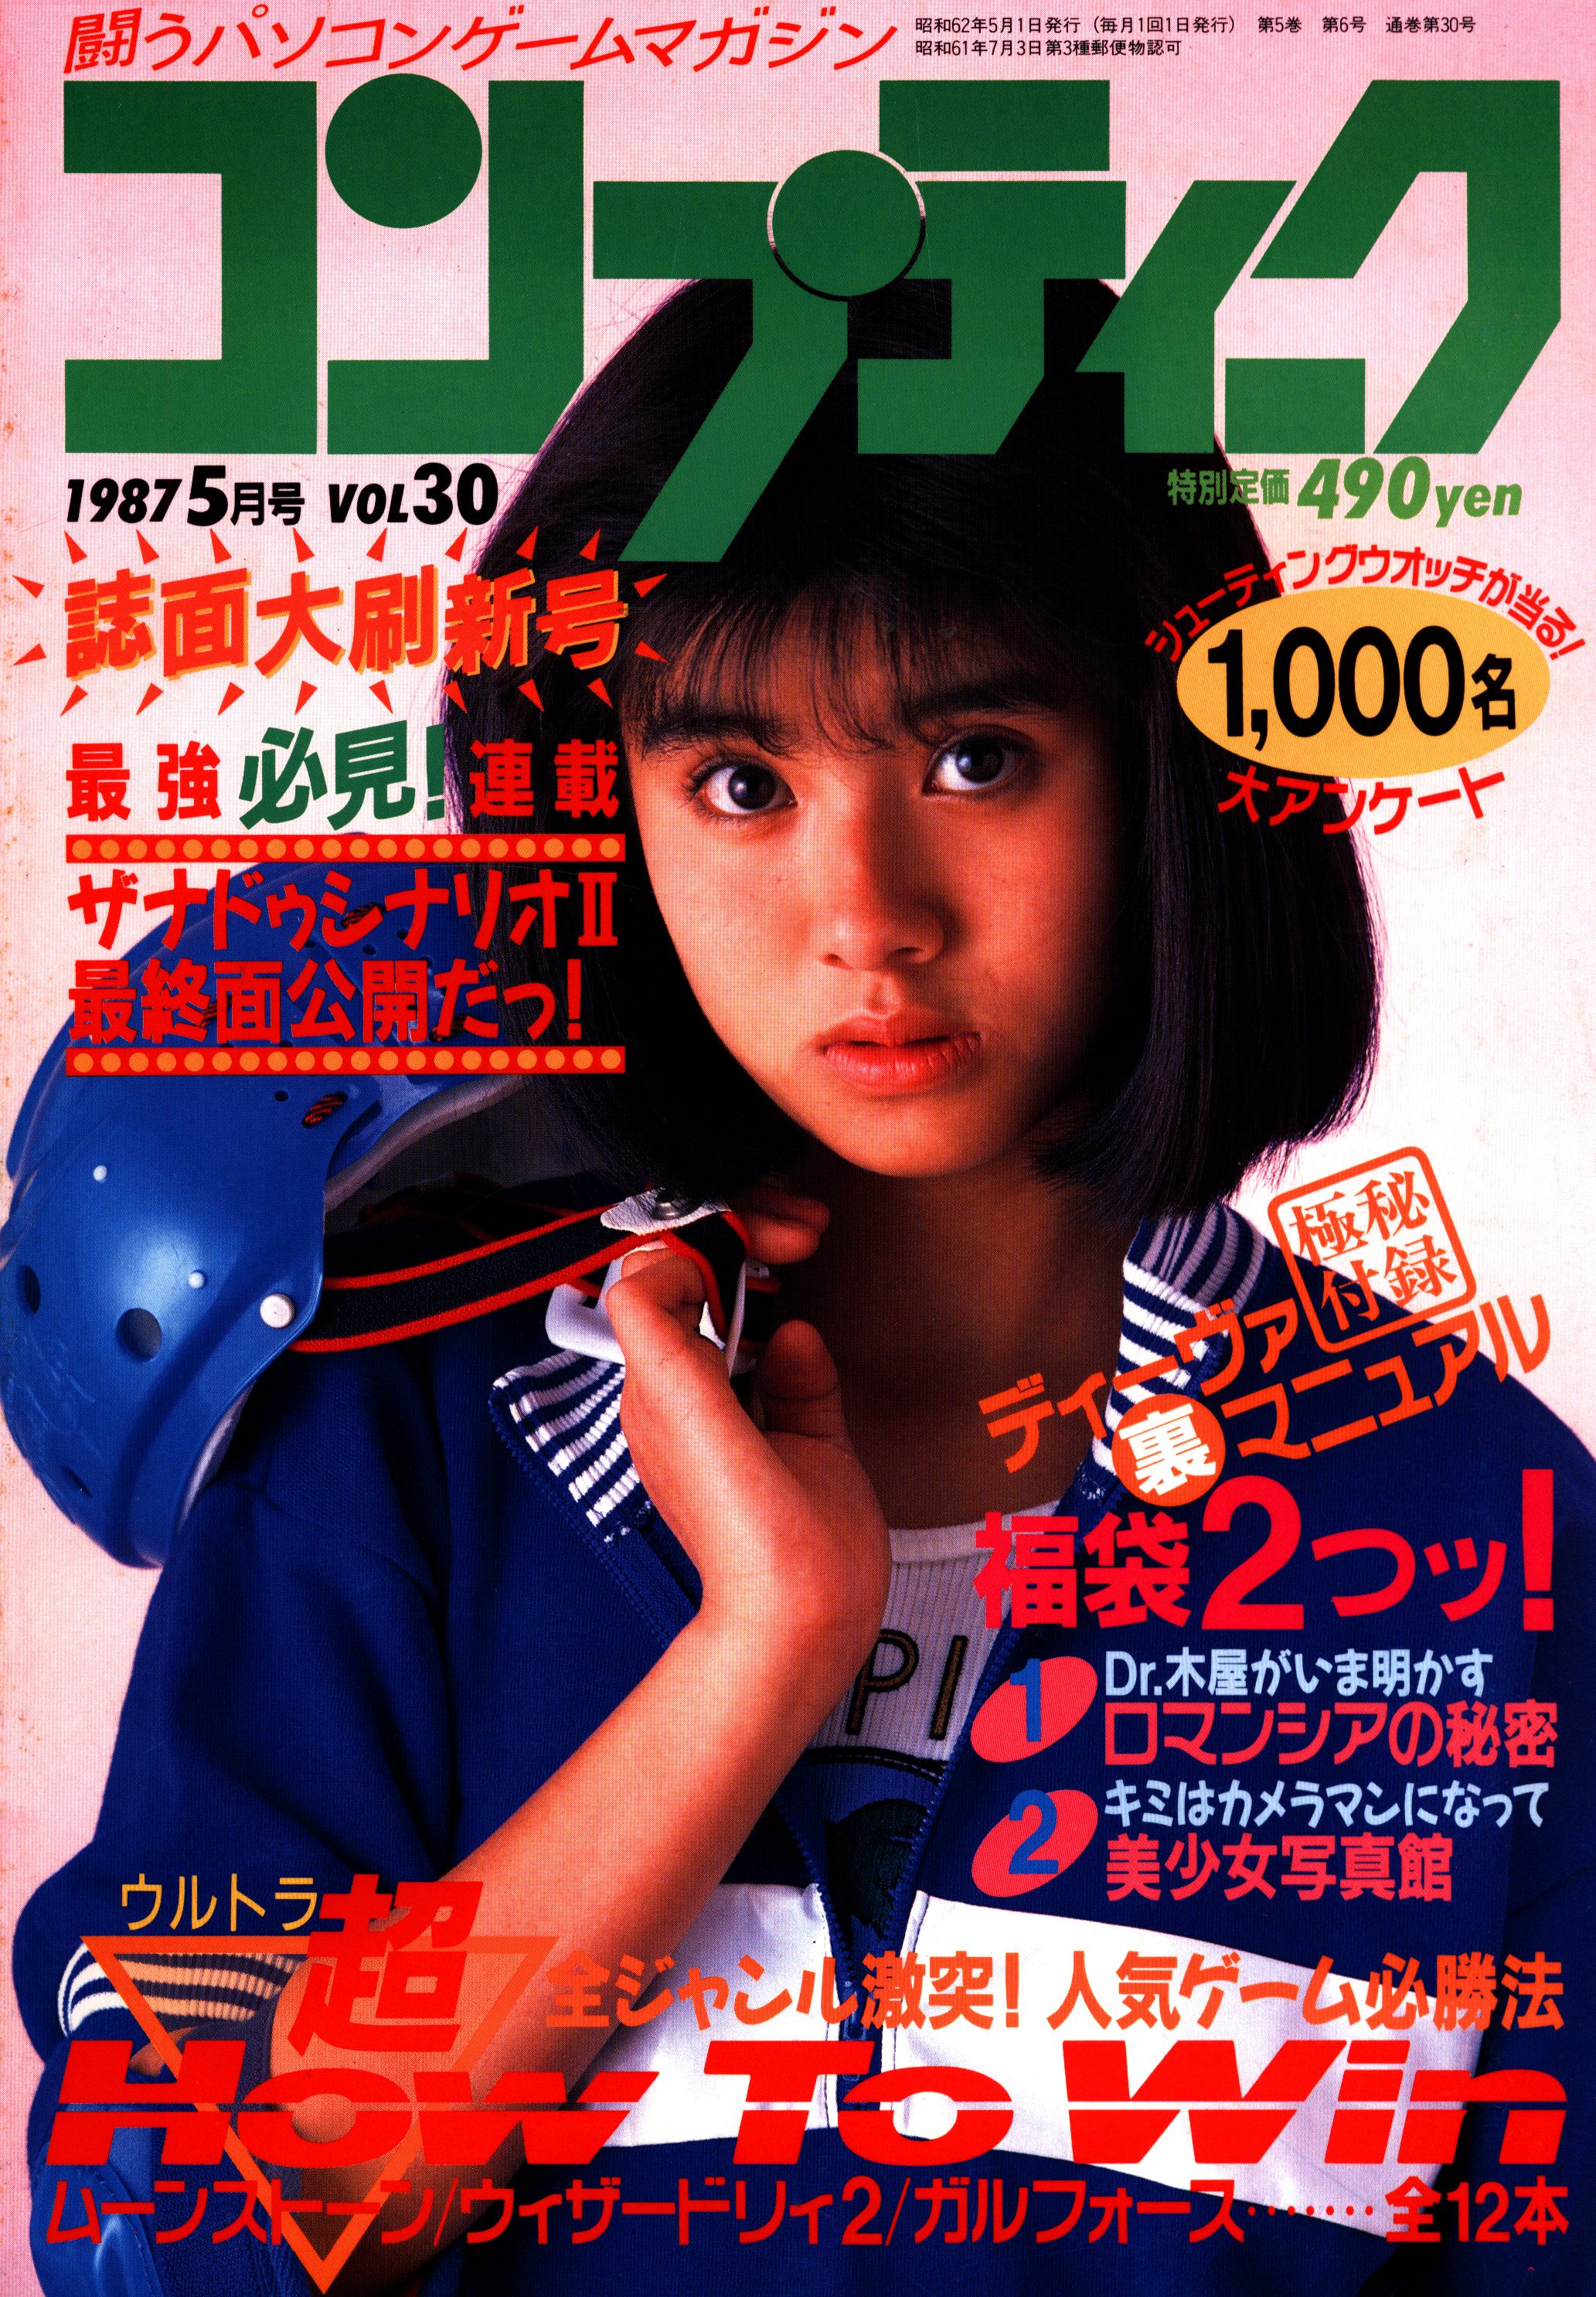 SALEf110 雑誌 月刊 コンプティーク 1989年 1～12月号 通年 全揃い まとめて12冊set Comptiq コンプ 角川書店 KADOKAWA パソコンゲーム